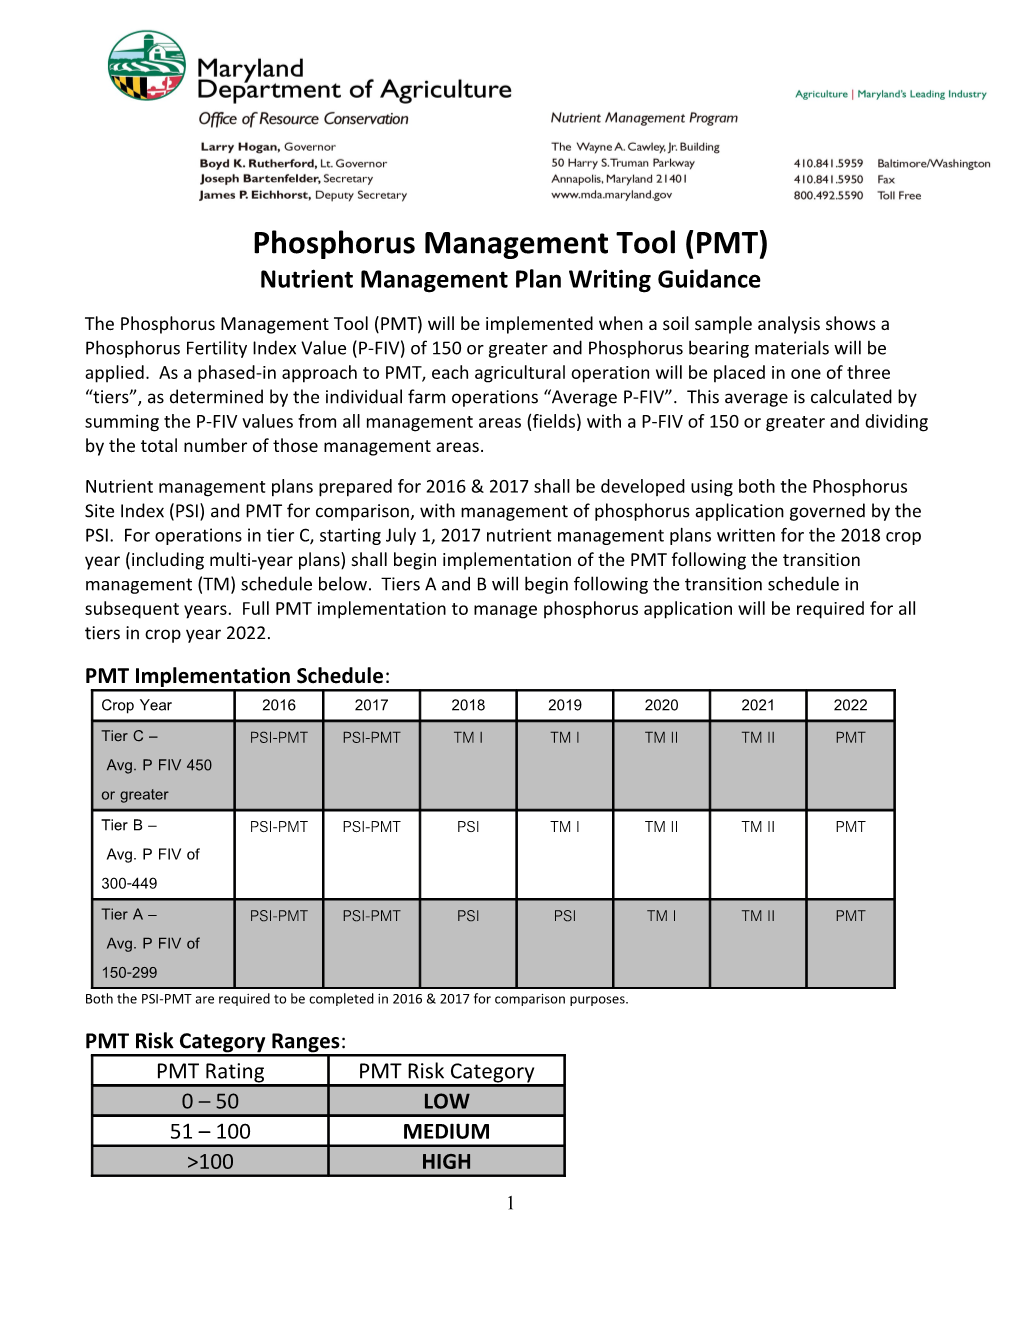 Phosphorus Management Tool(PMT)